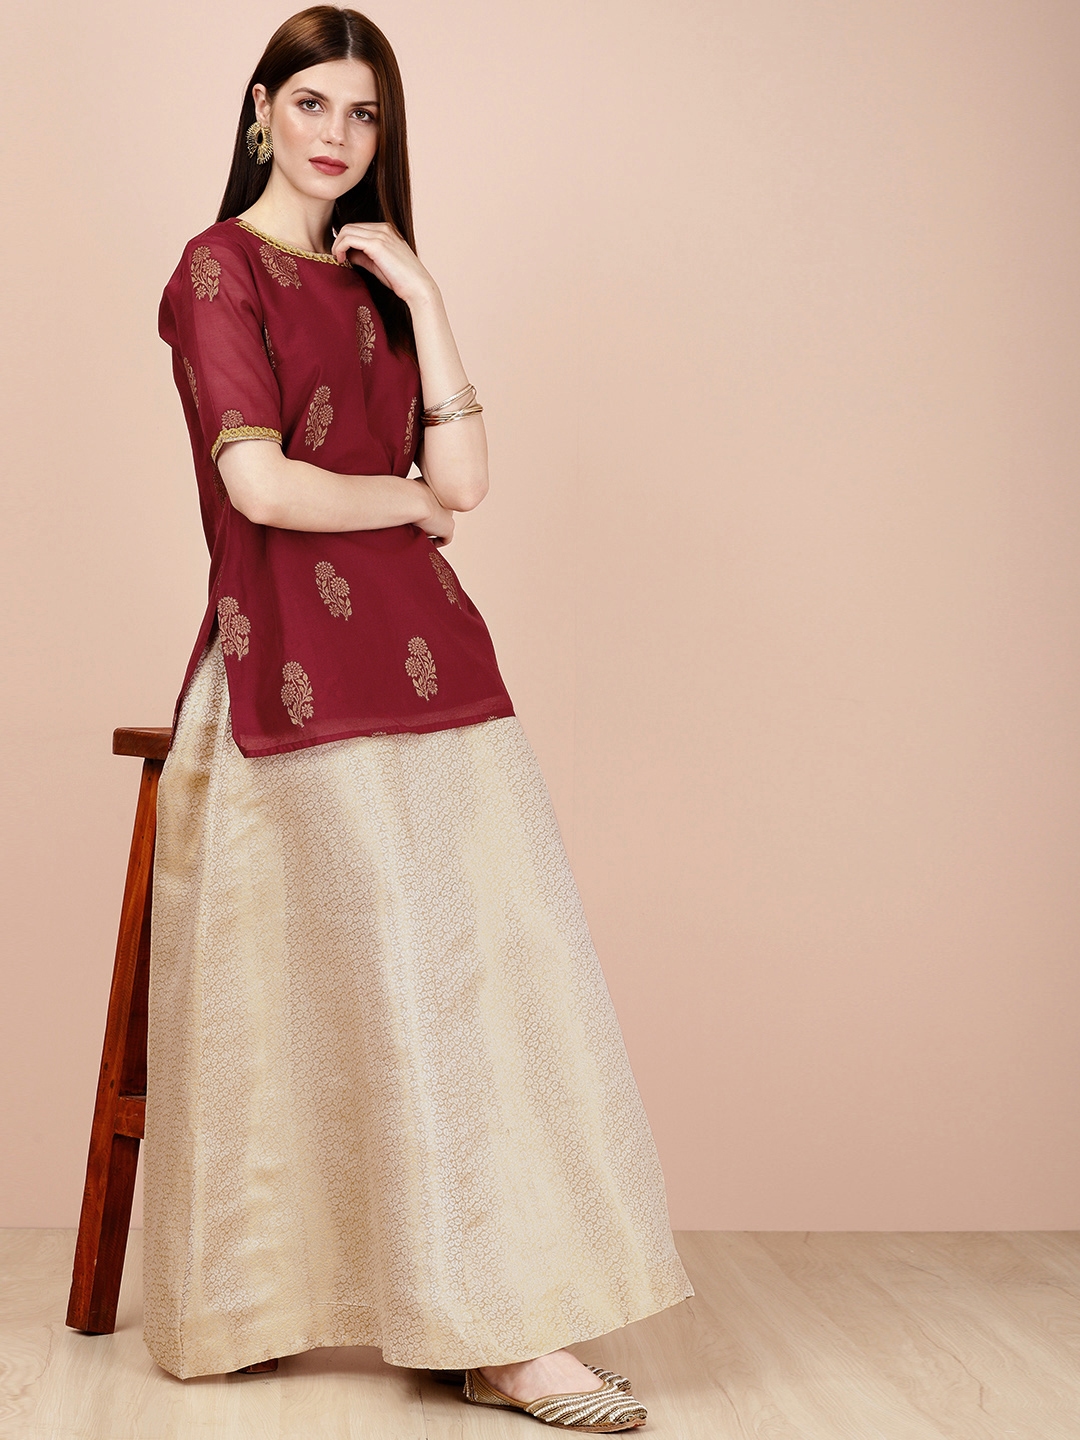 Cotton Printed Long Skirt Kurti at Rs 580/piece in Jaipur | ID: 19740852288-vinhomehanoi.com.vn